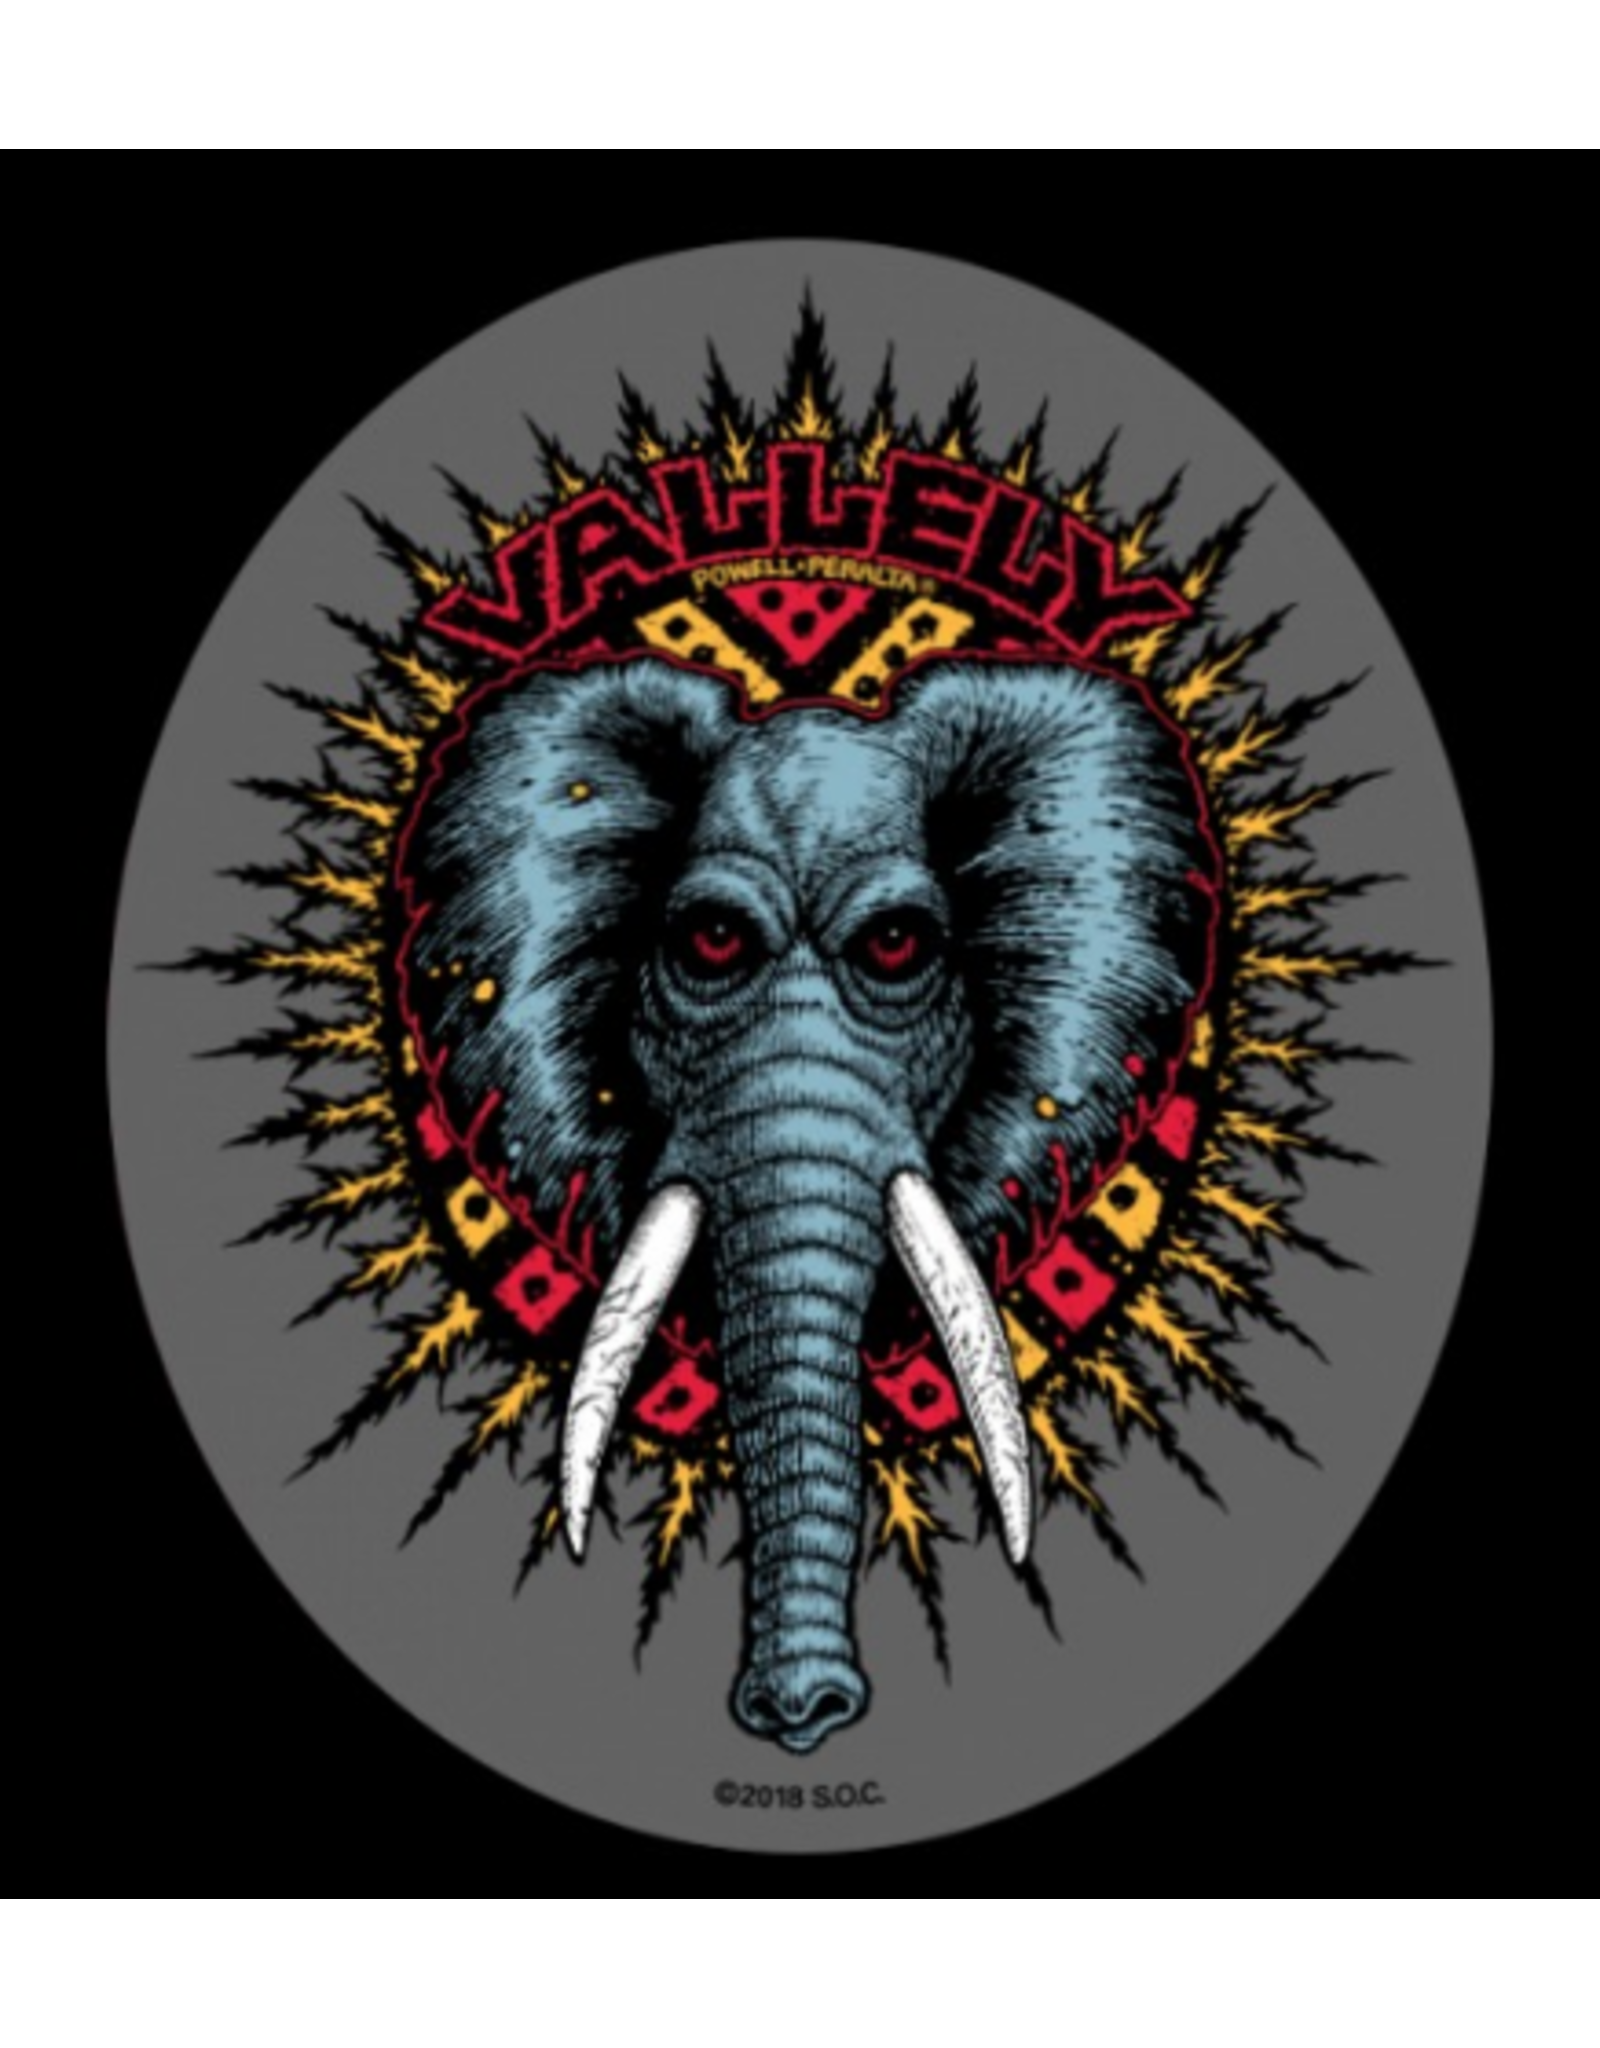 POWELL Powell Peralta Vallely Elephant Sticker single